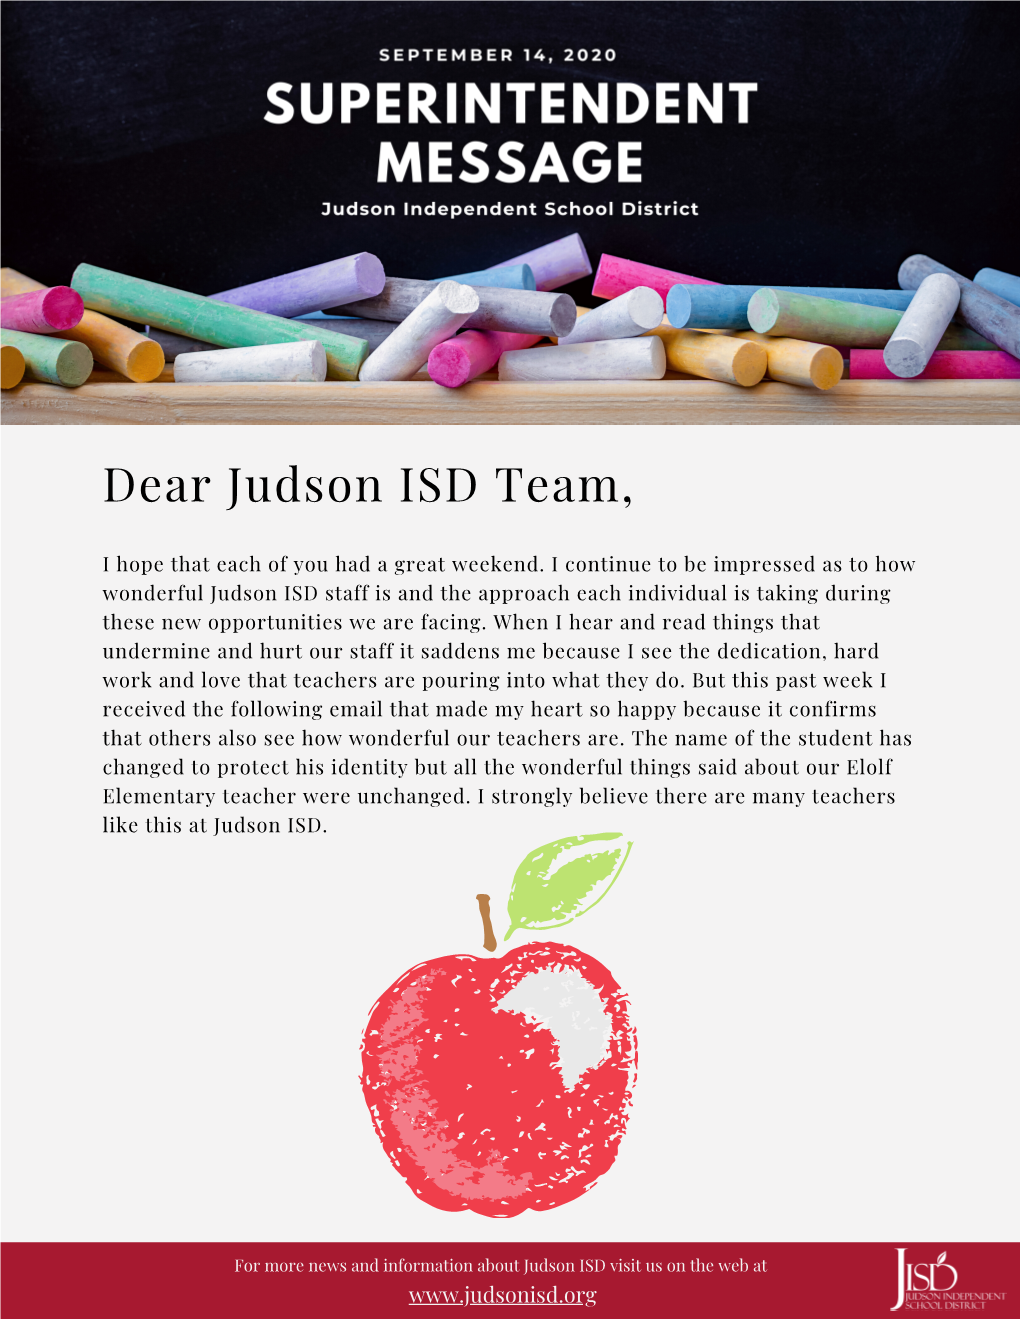 Dear Judson ISD Team